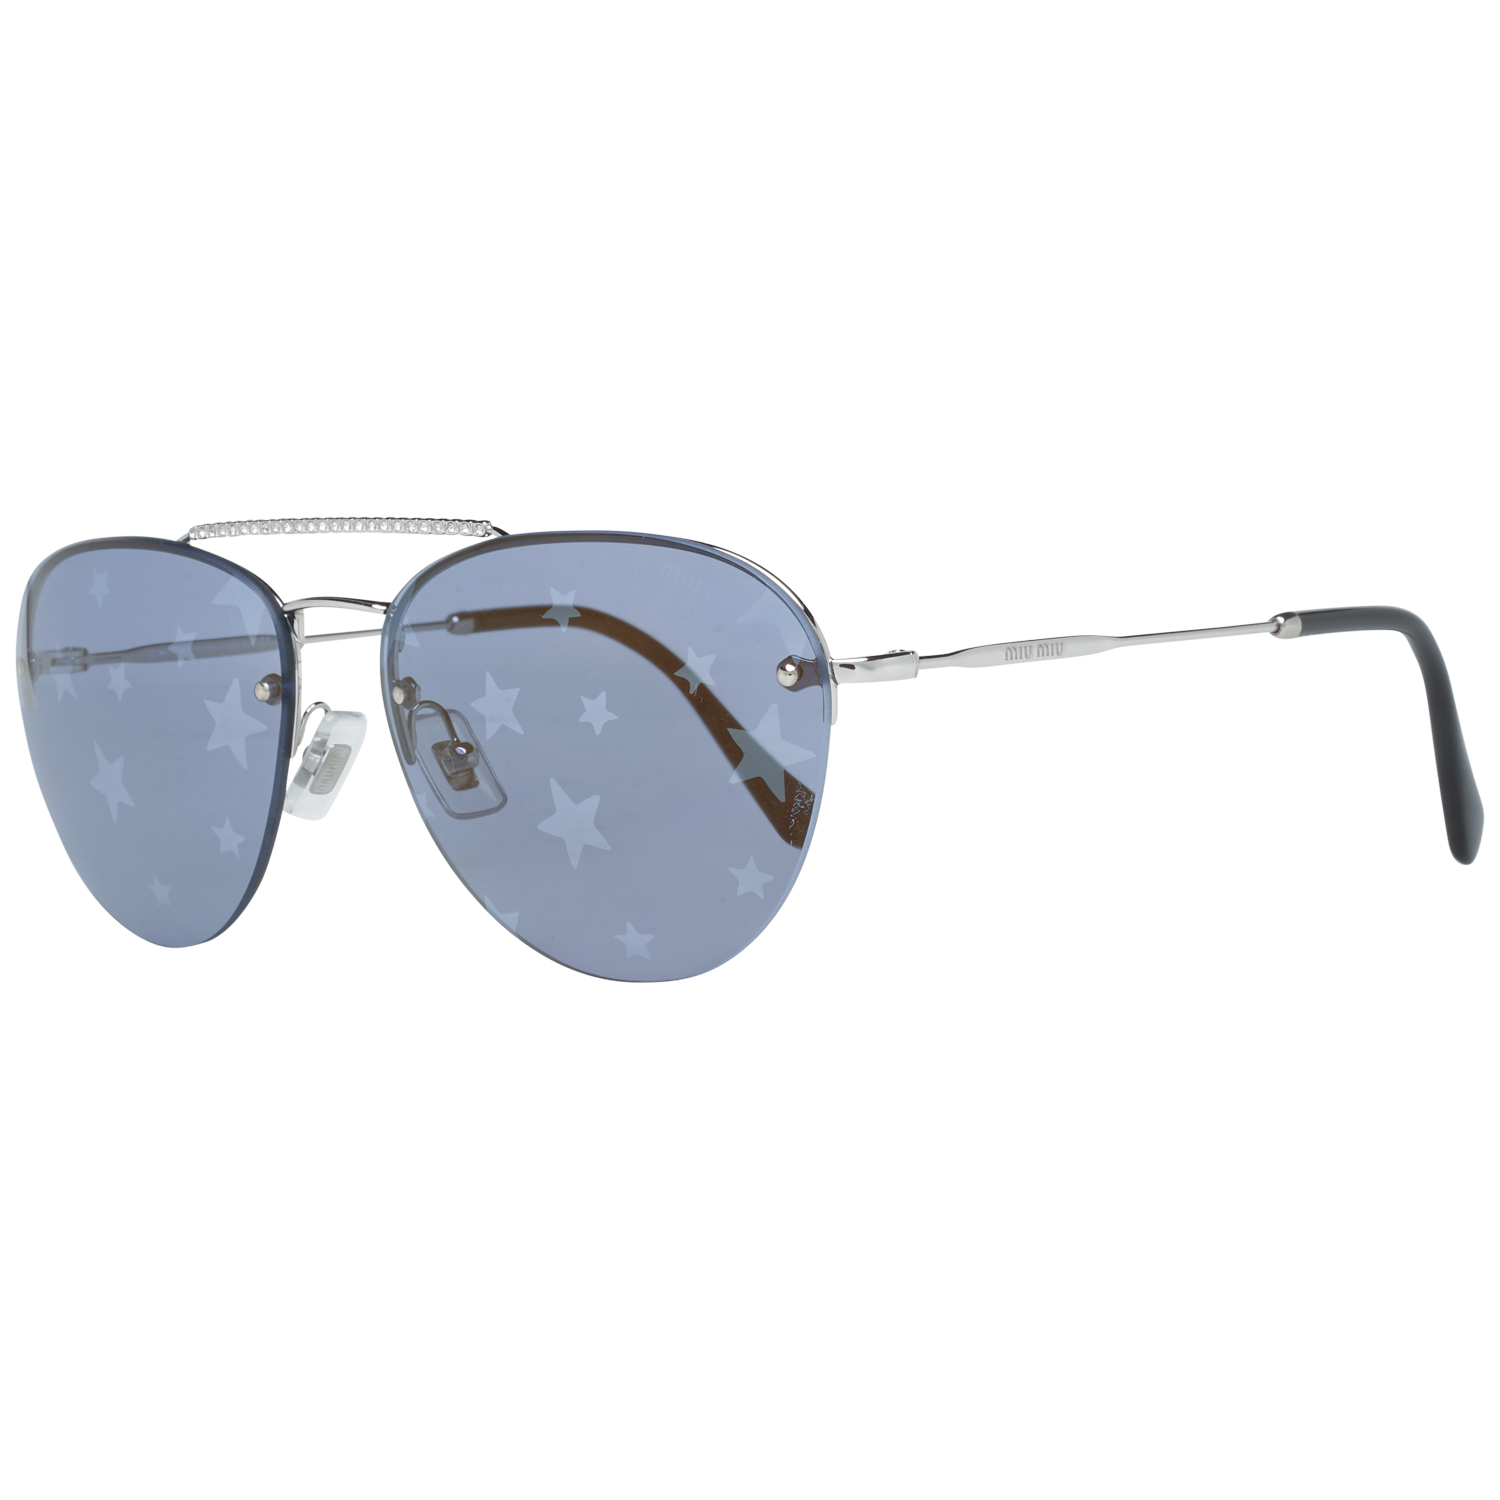 Miu Miu Sunglasses MU54US 1BC182 59 Silver